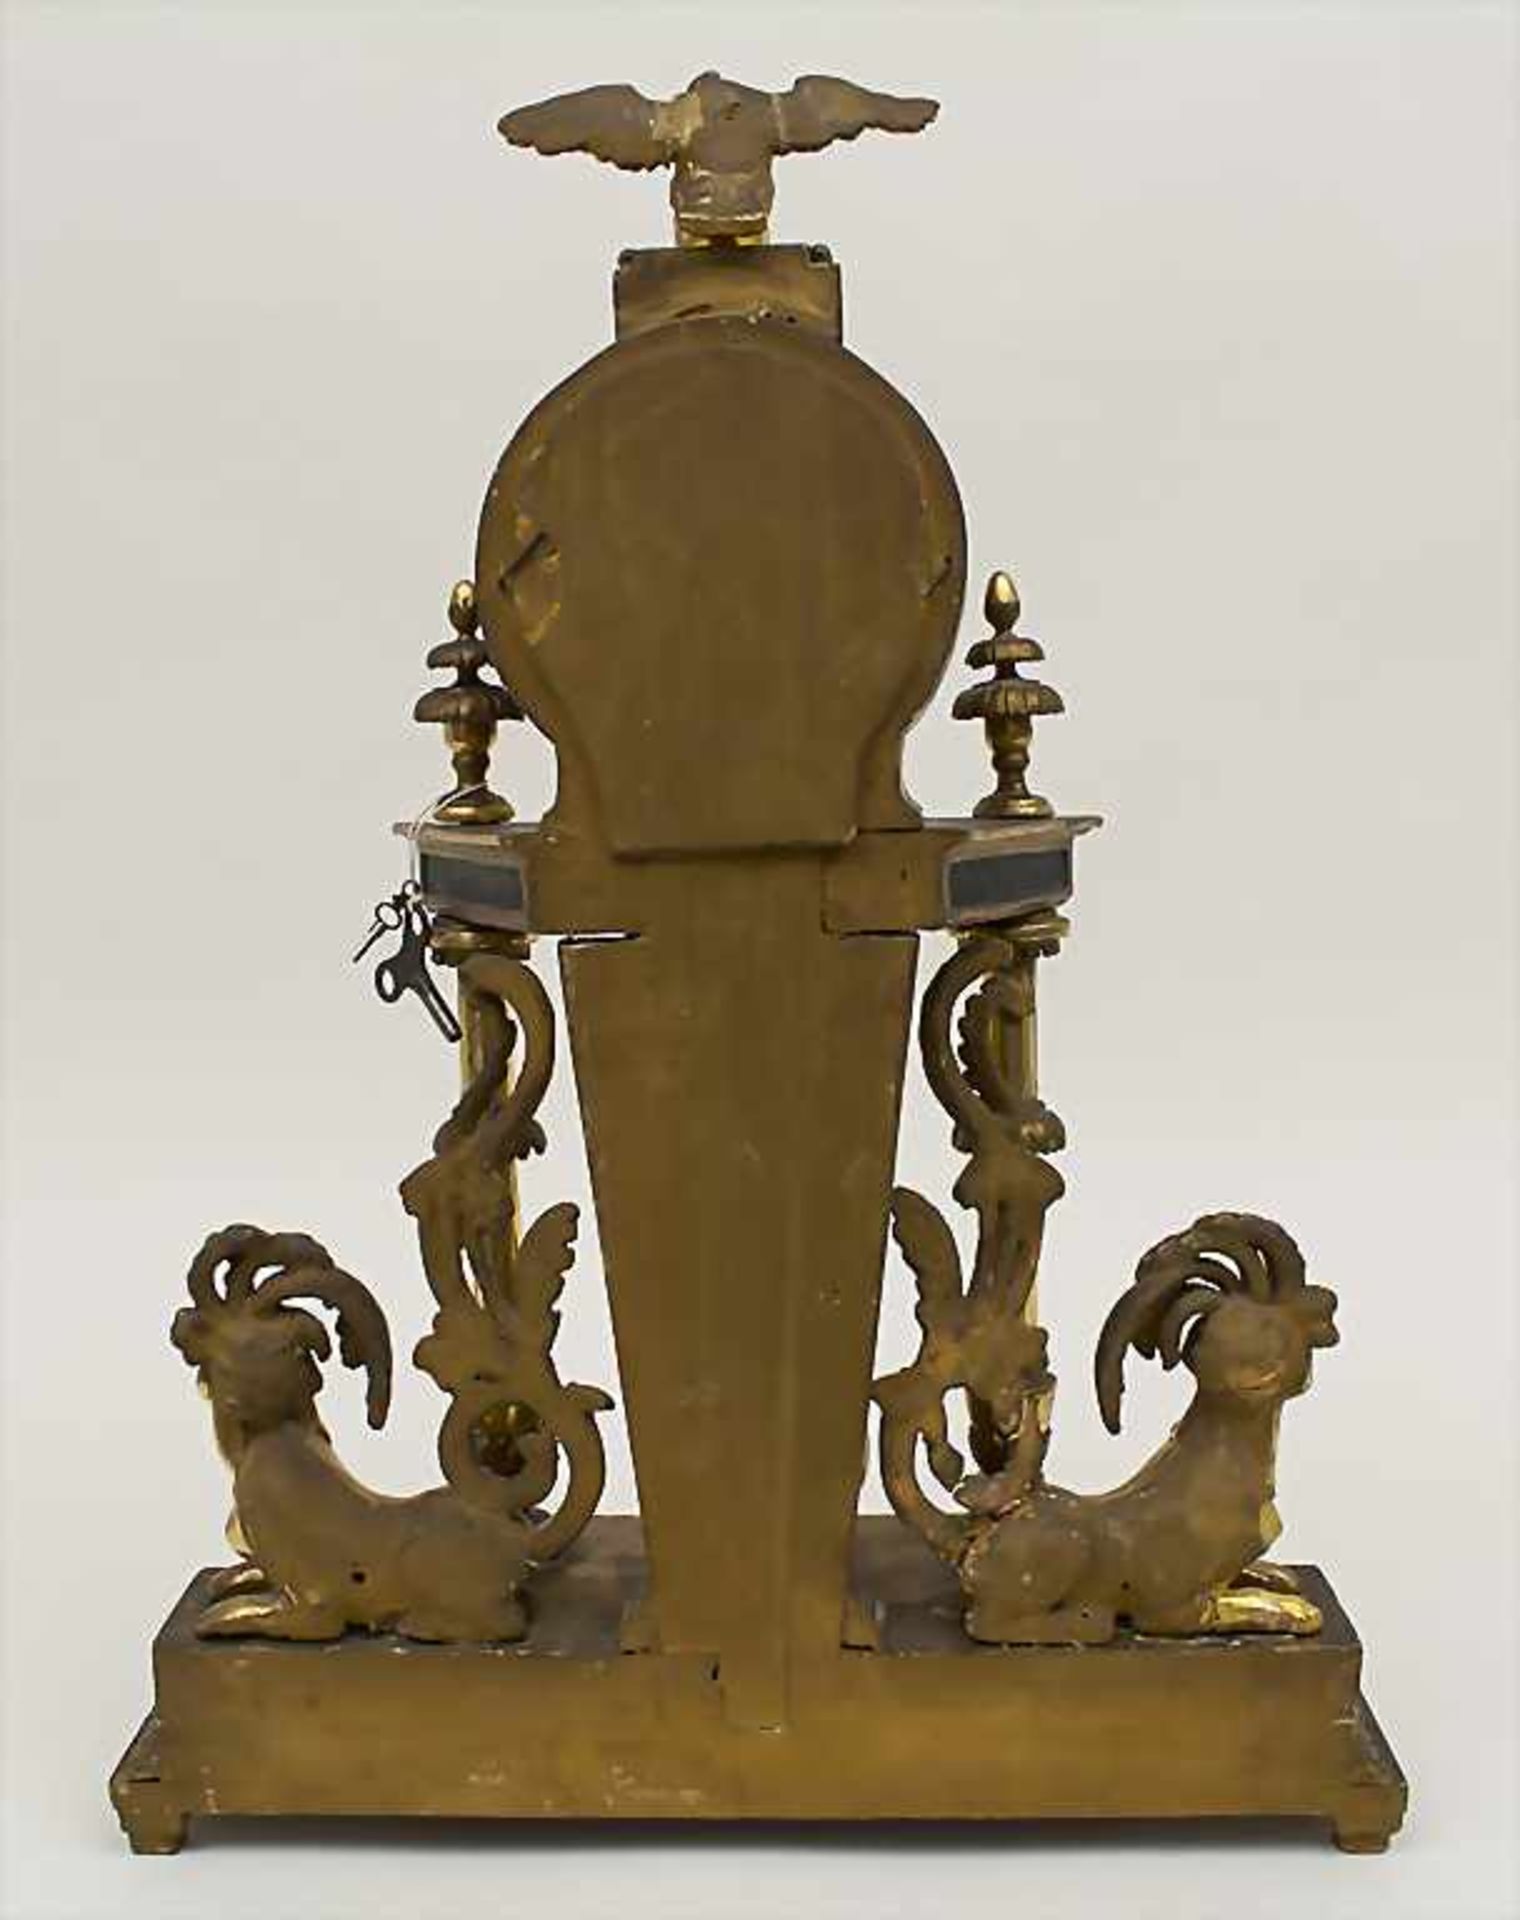 Louis-Seize-Kaminuhr / Louis-Seize mantle Clock, Wien, um 1775 - Image 2 of 8